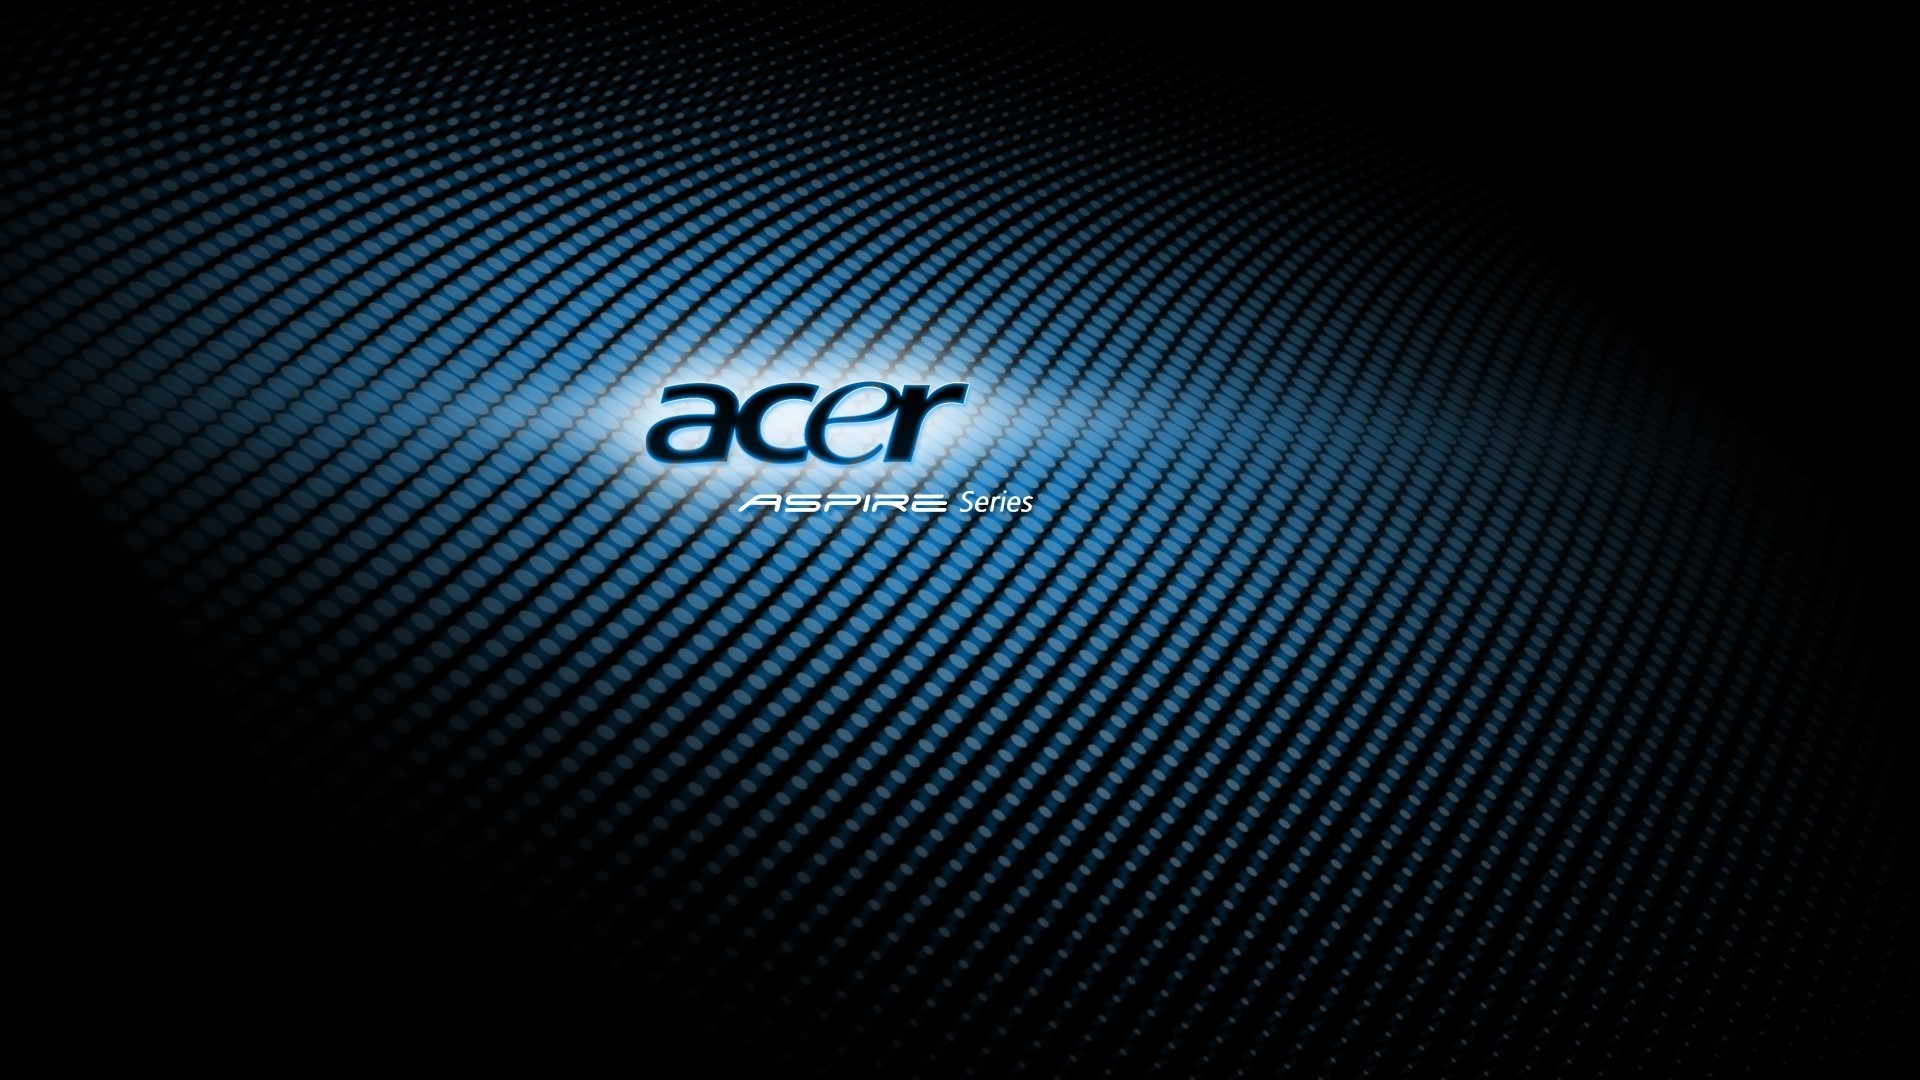 Acer logo 1920 1080